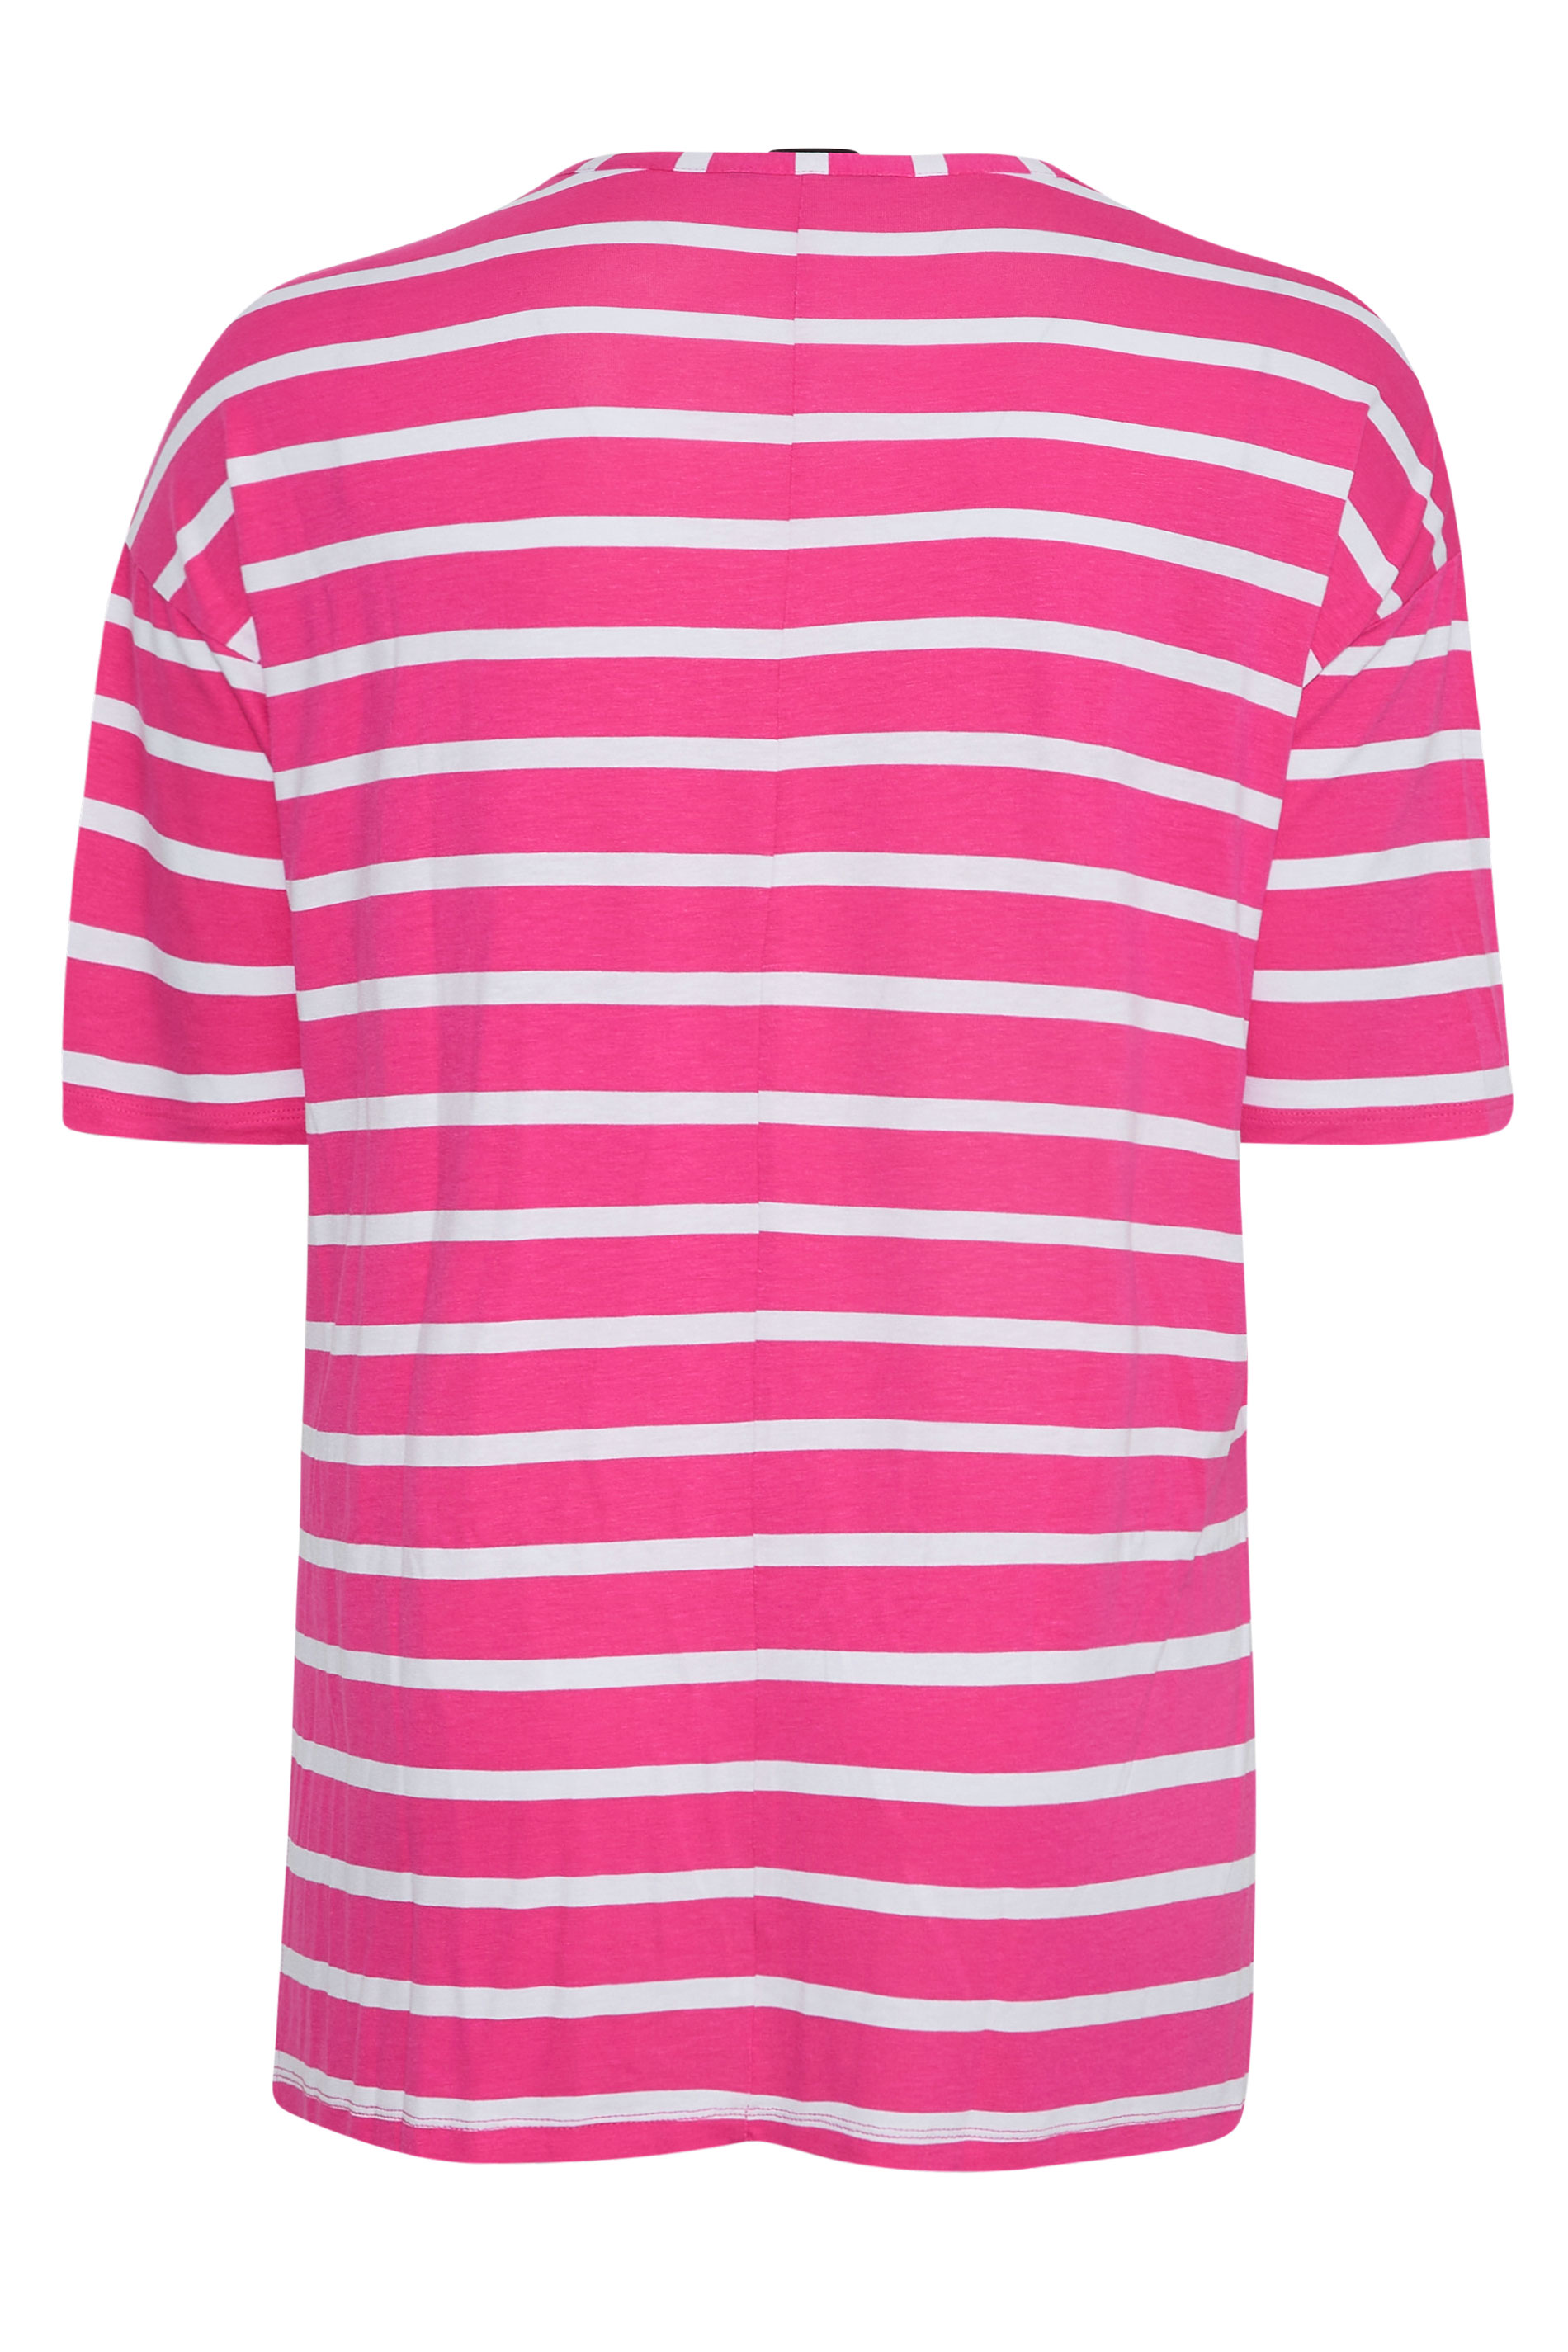 Grande taille  Tops Grande taille  T-Shirts Basiques & Débardeurs | T-Shirt Oversize Rose & Blanc à Rayures - FH77847